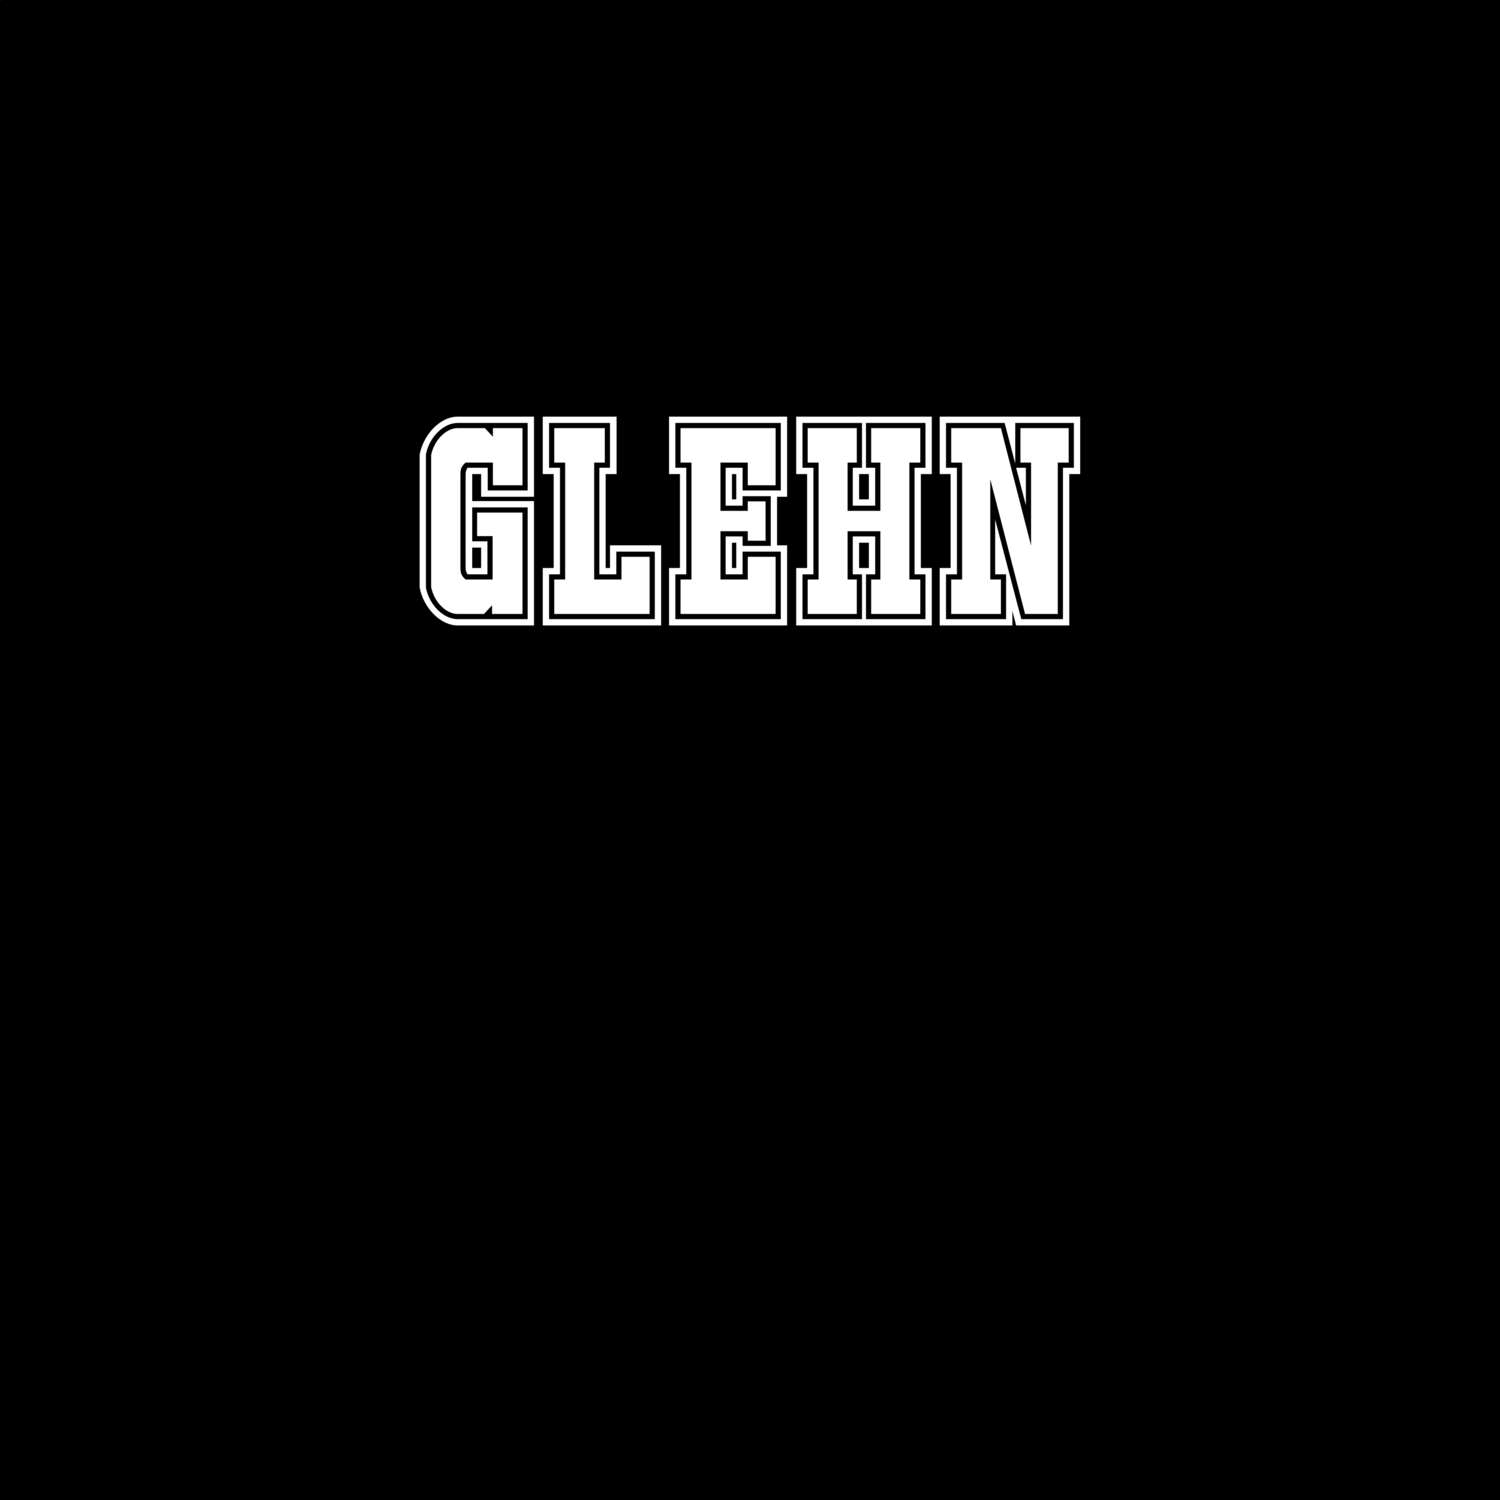 Glehn T-Shirt »Classic«